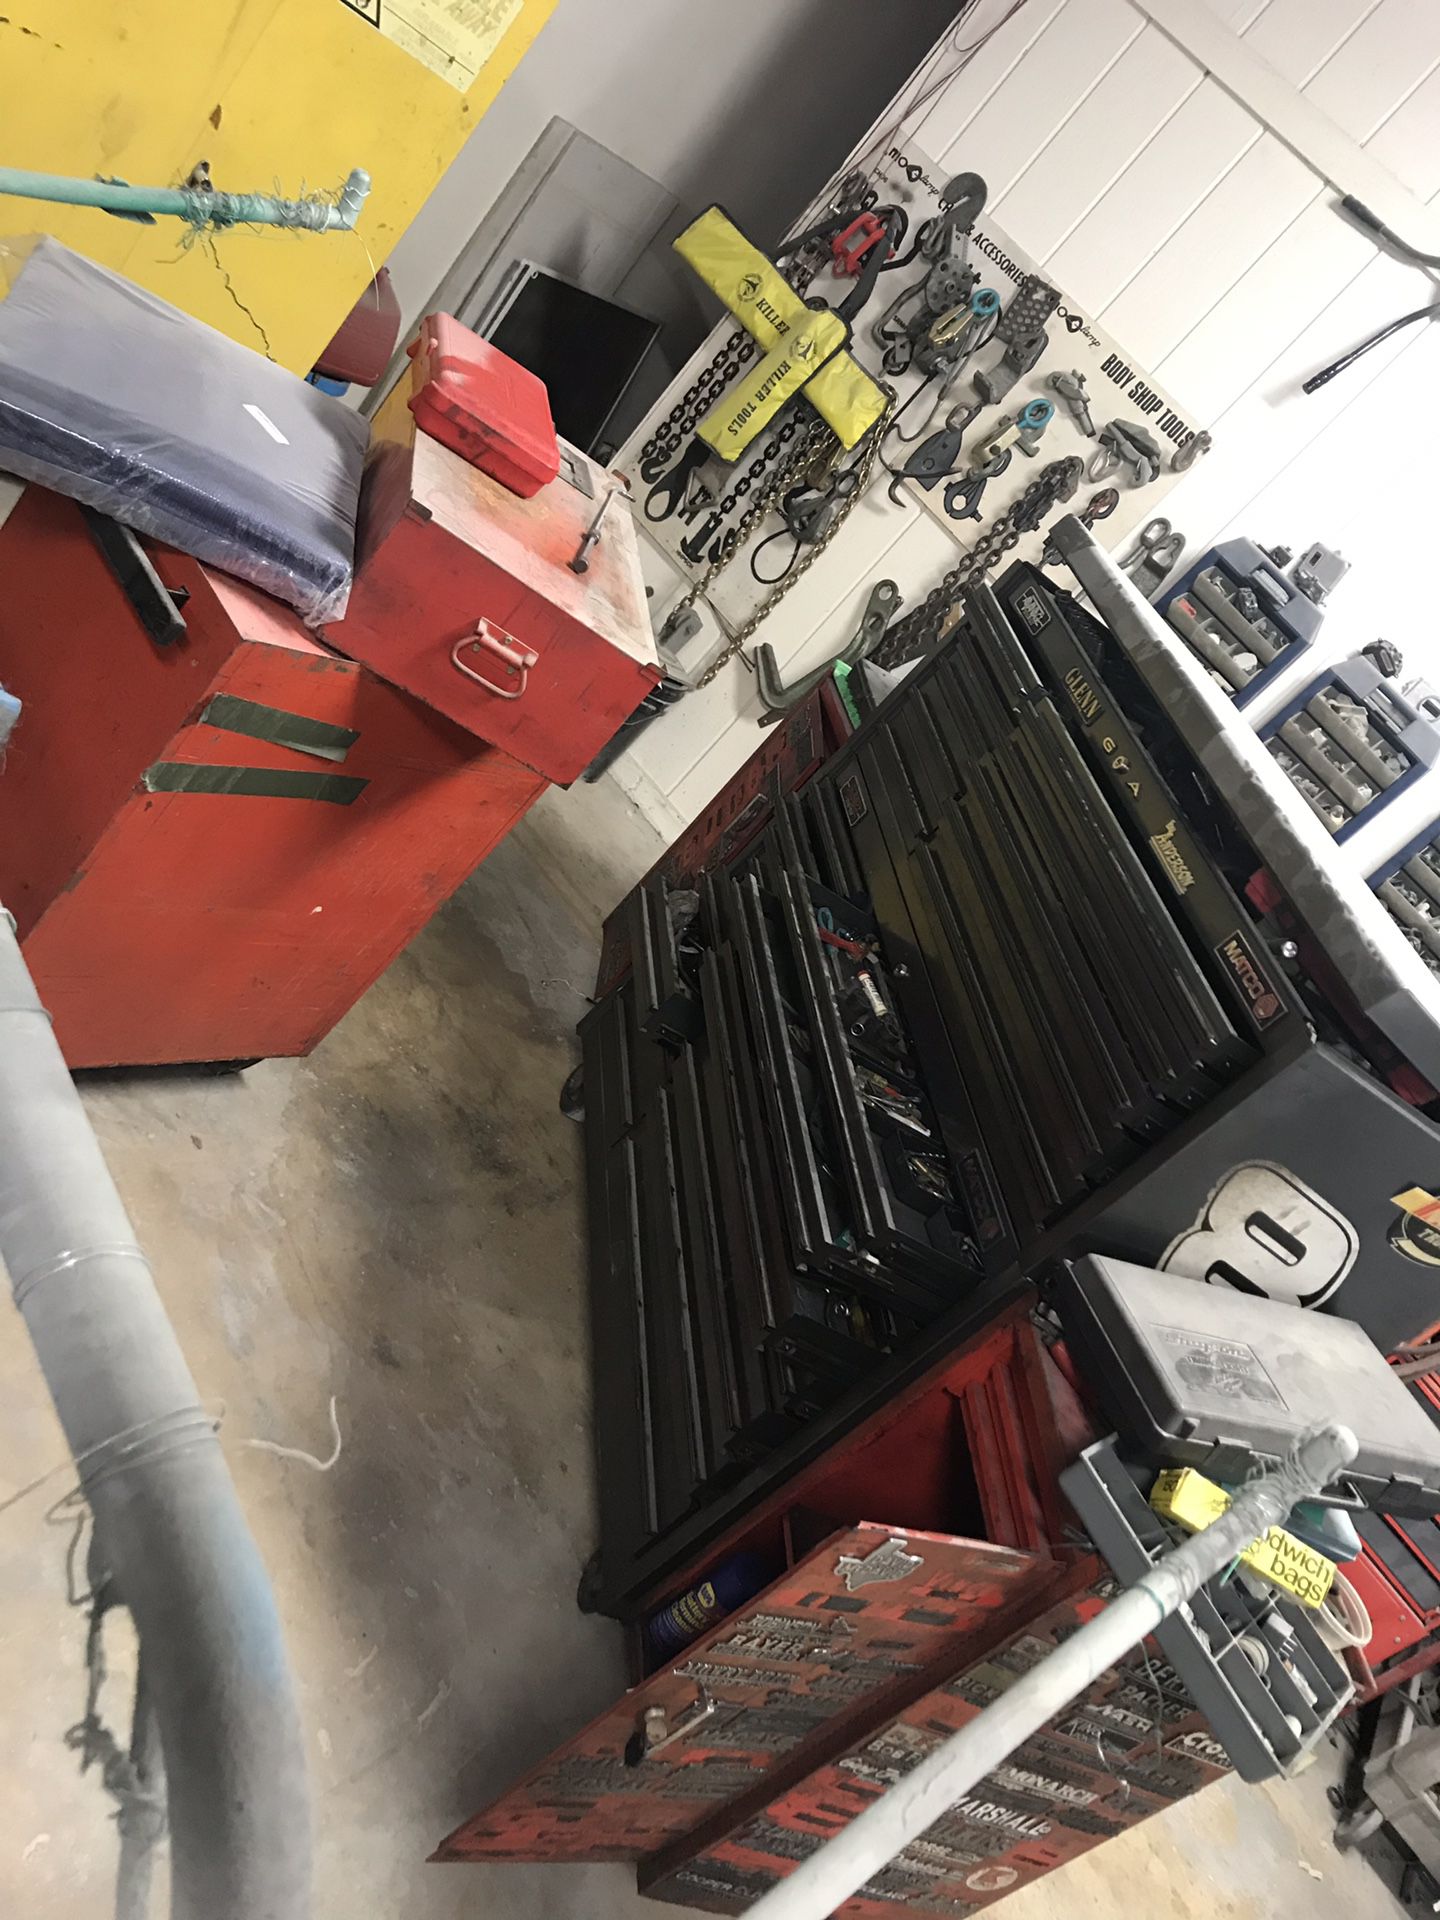 Mechanic tool box and tools